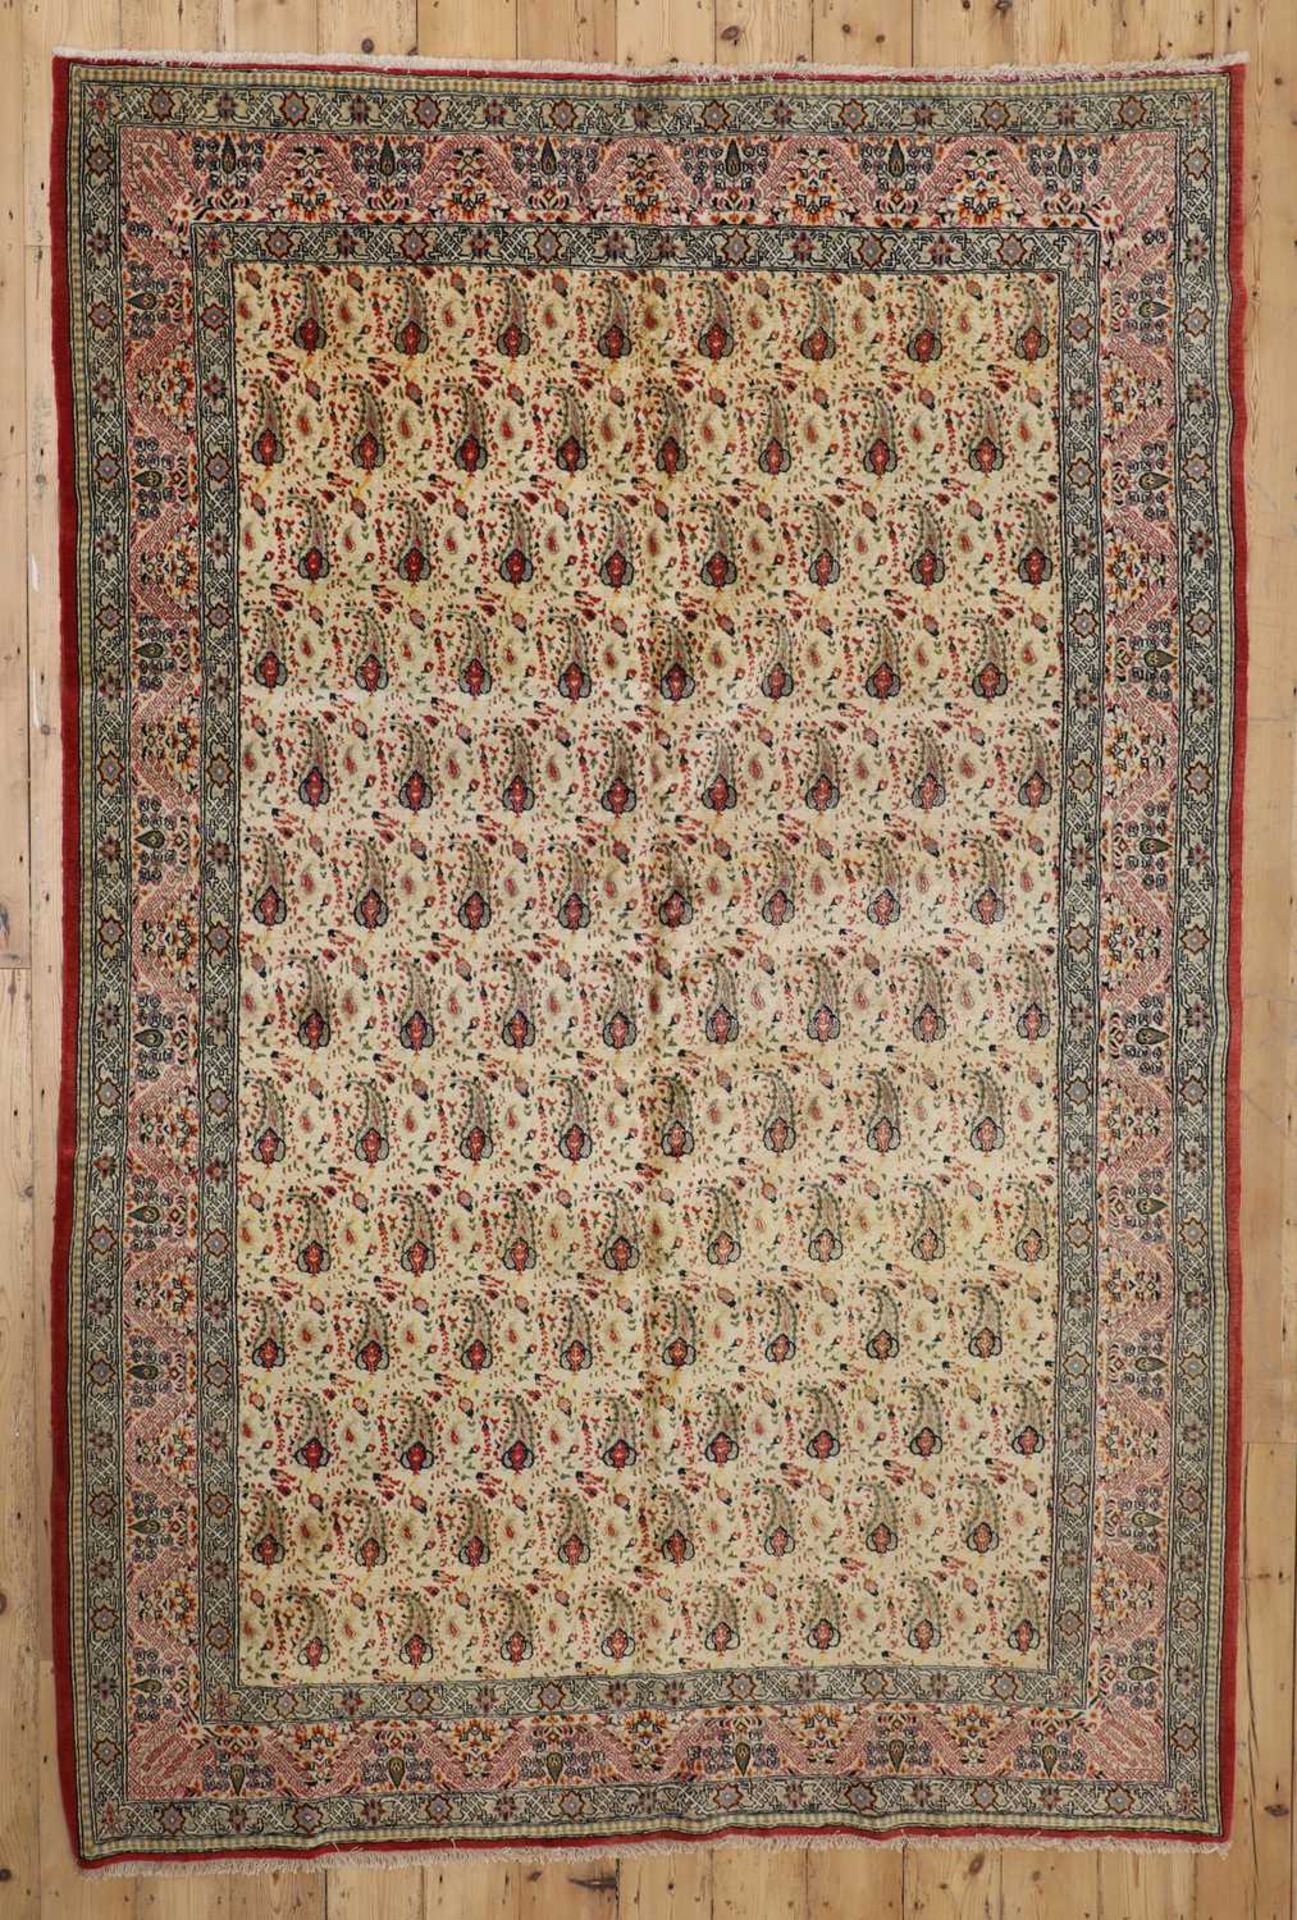 A Qum wool carpet with silk highlights,